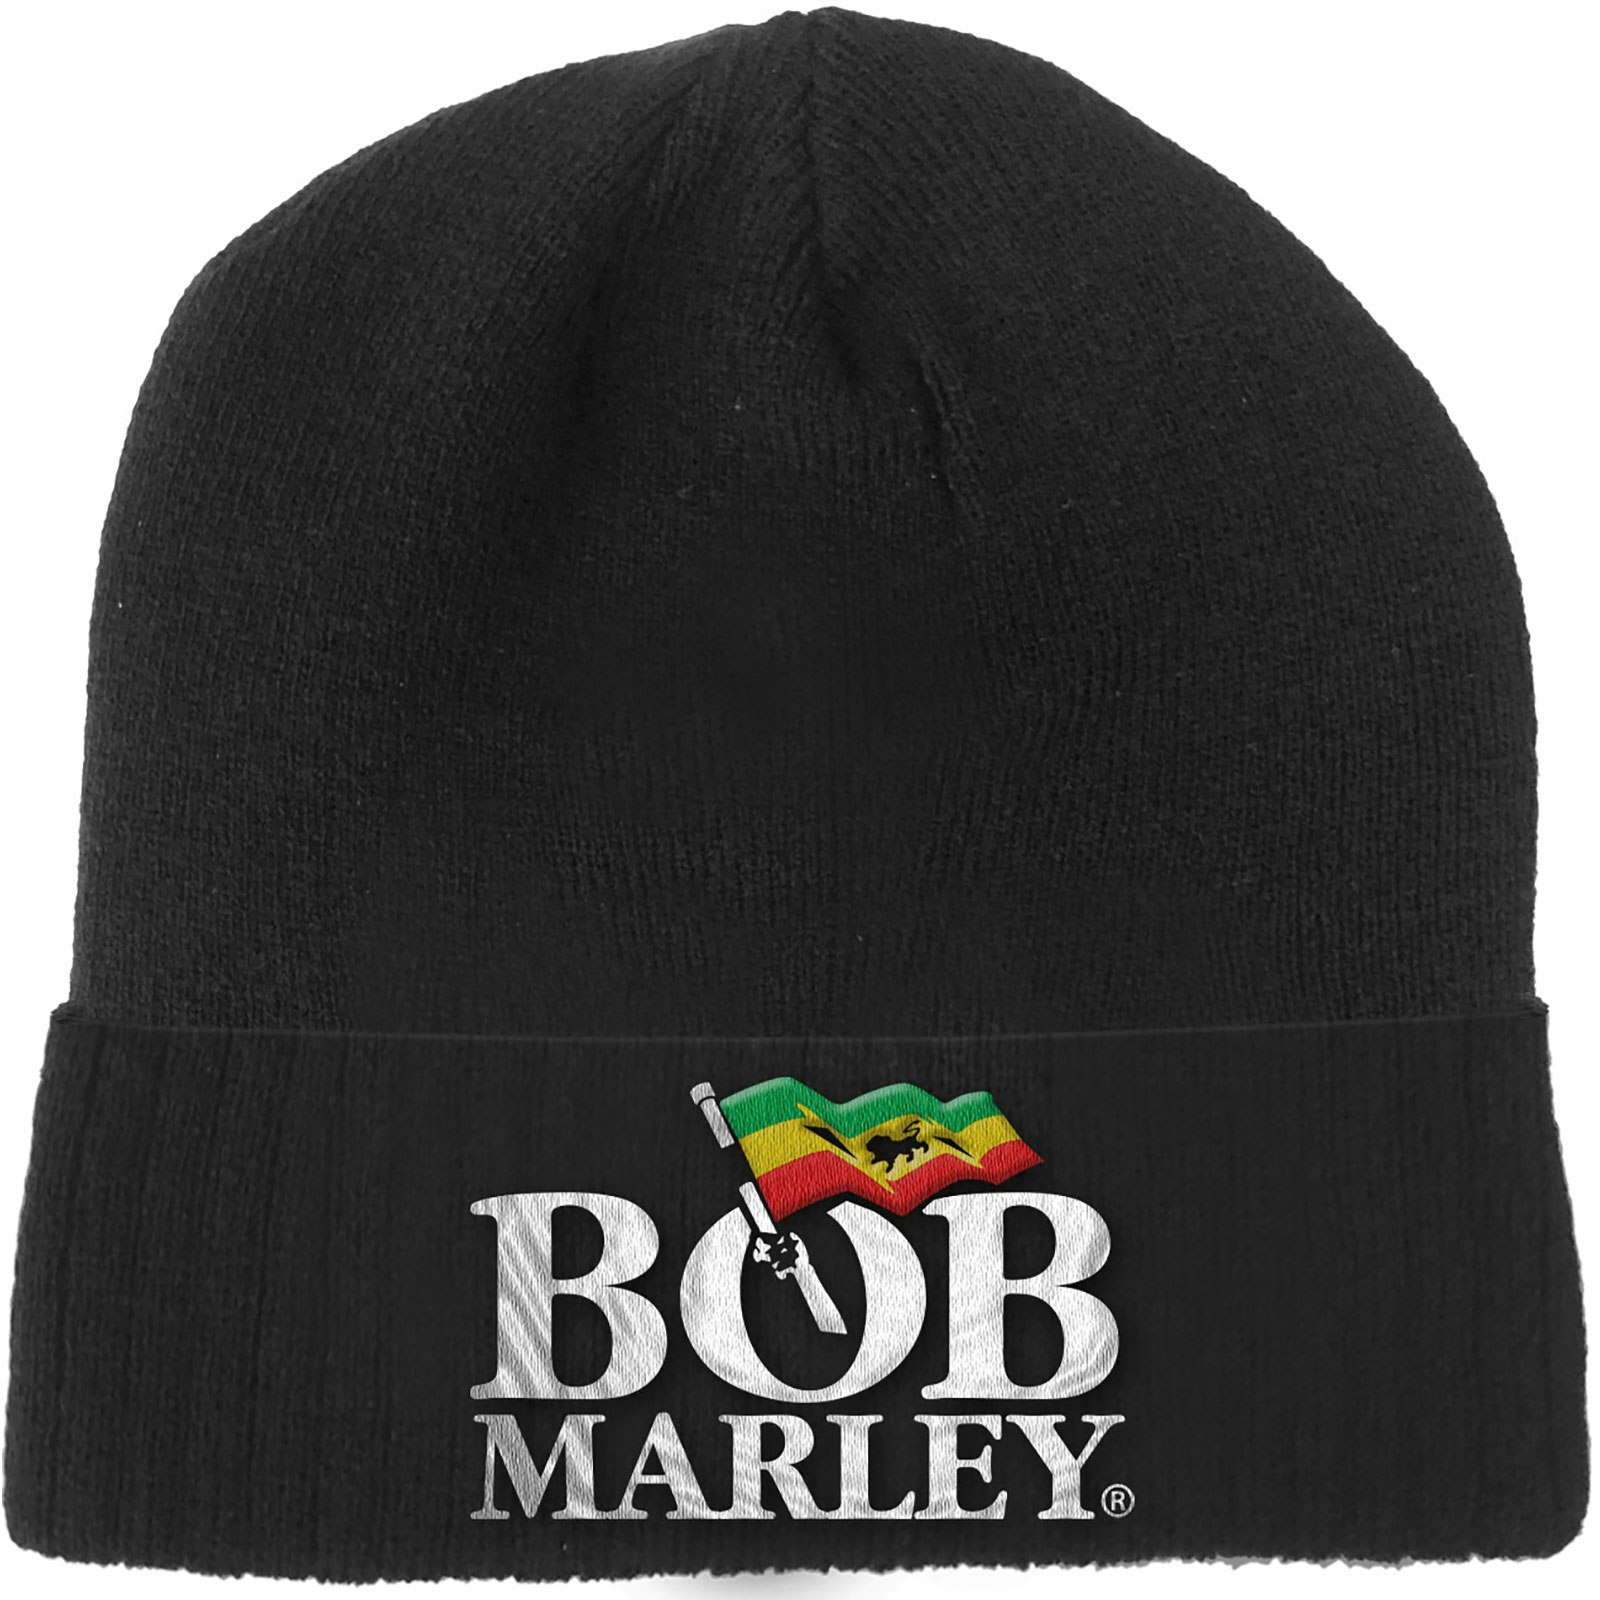 Bob Marley beanie